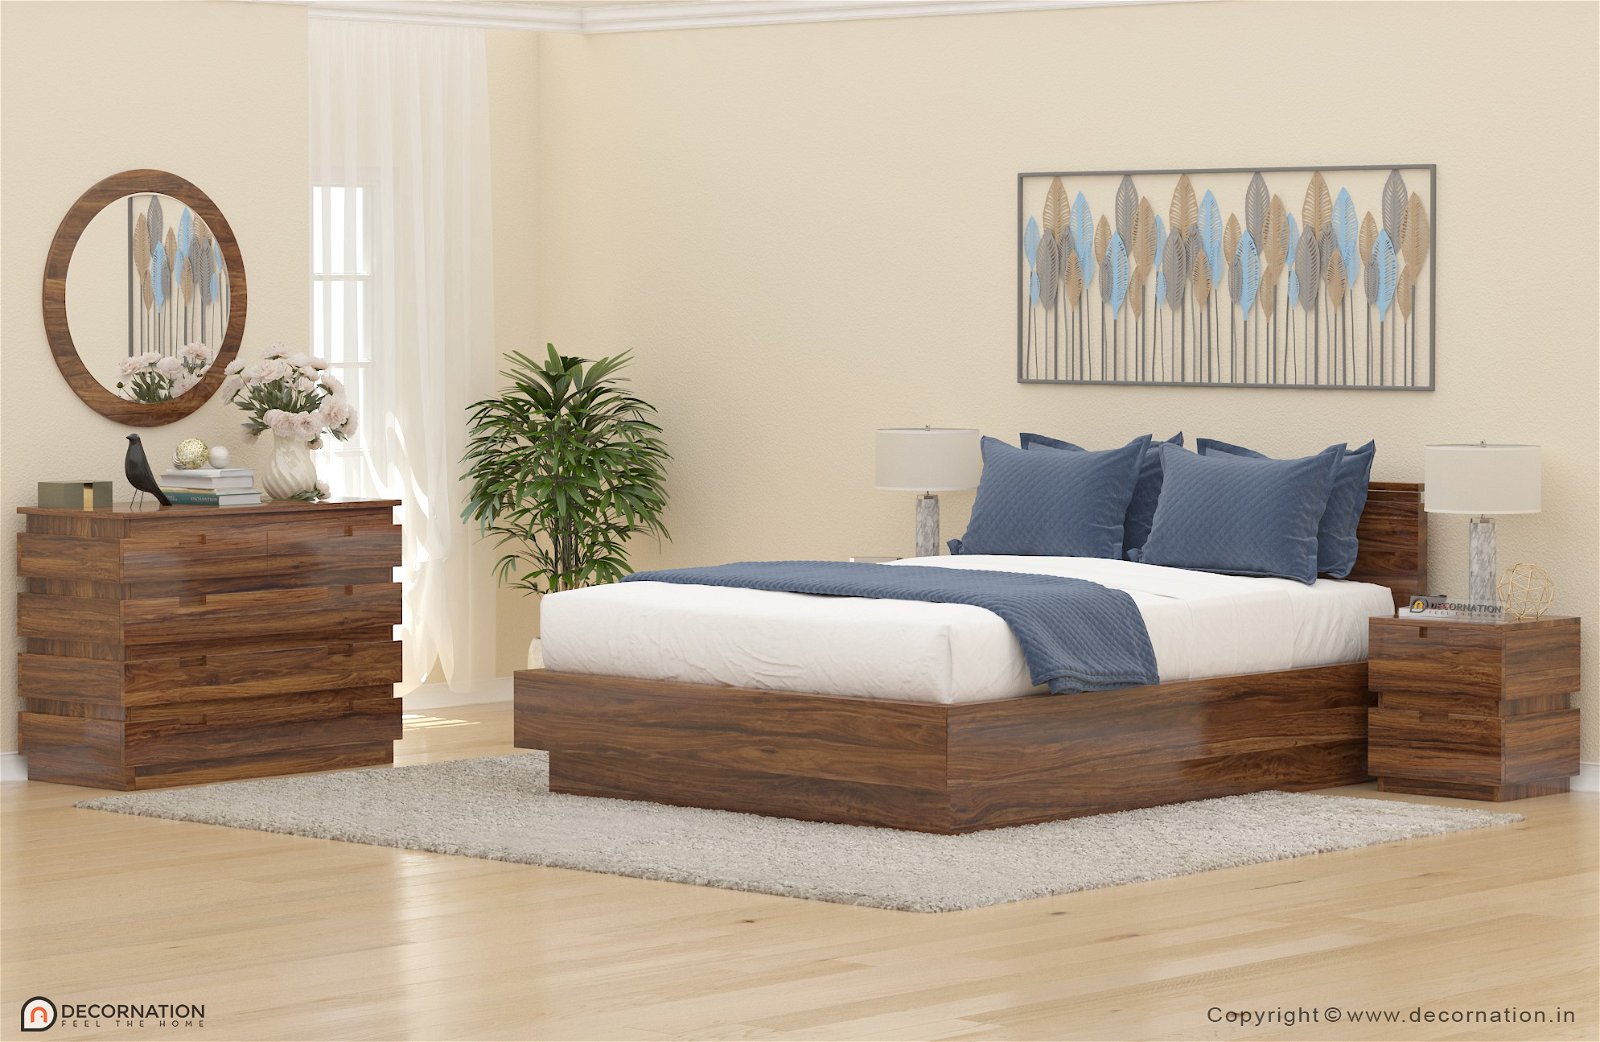 Boston Wooden Storage Double Bed With Storage Brown Decornation 0612